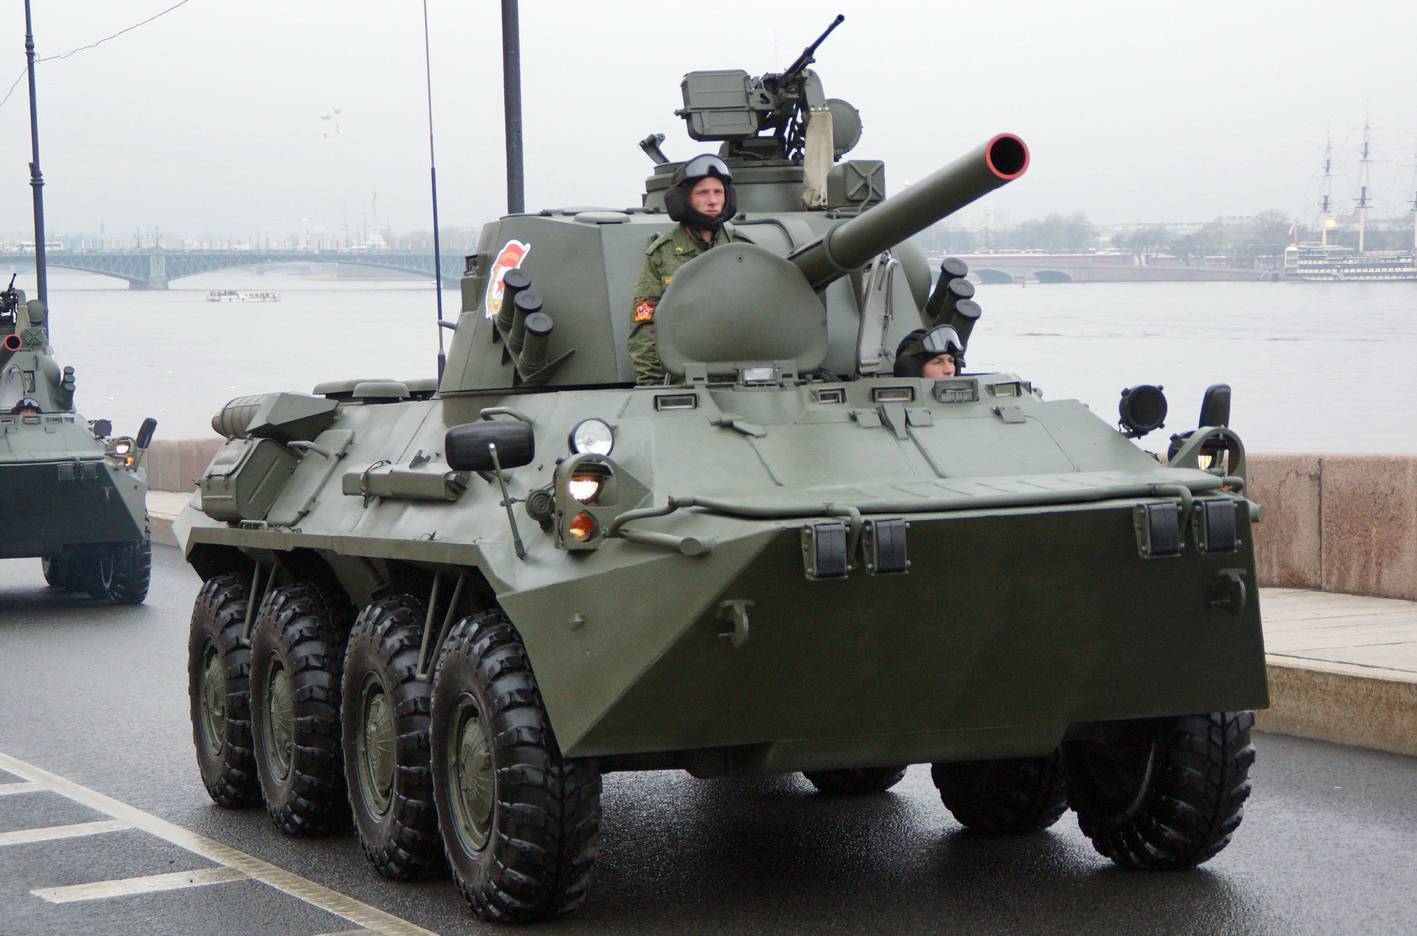 Сау нона-свк 2с23 — 120мм самоходная артиллерийская установка